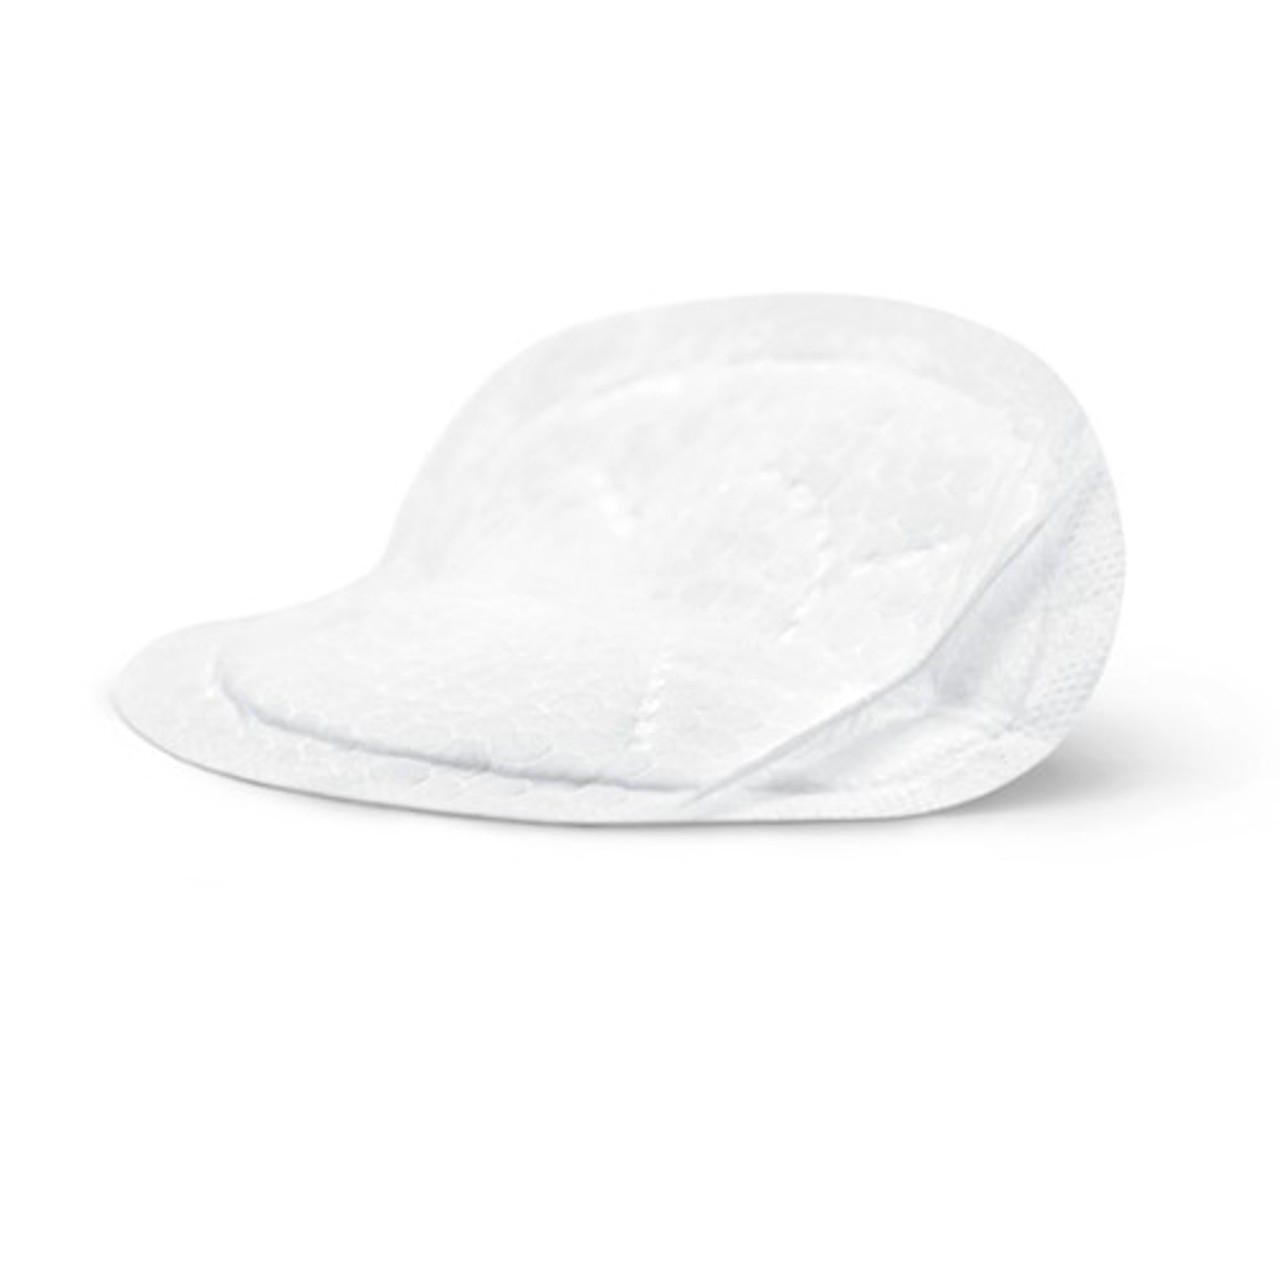 Medela Safe & Dry Ultra Thin Disposable Nursing Pads, 240-Pack